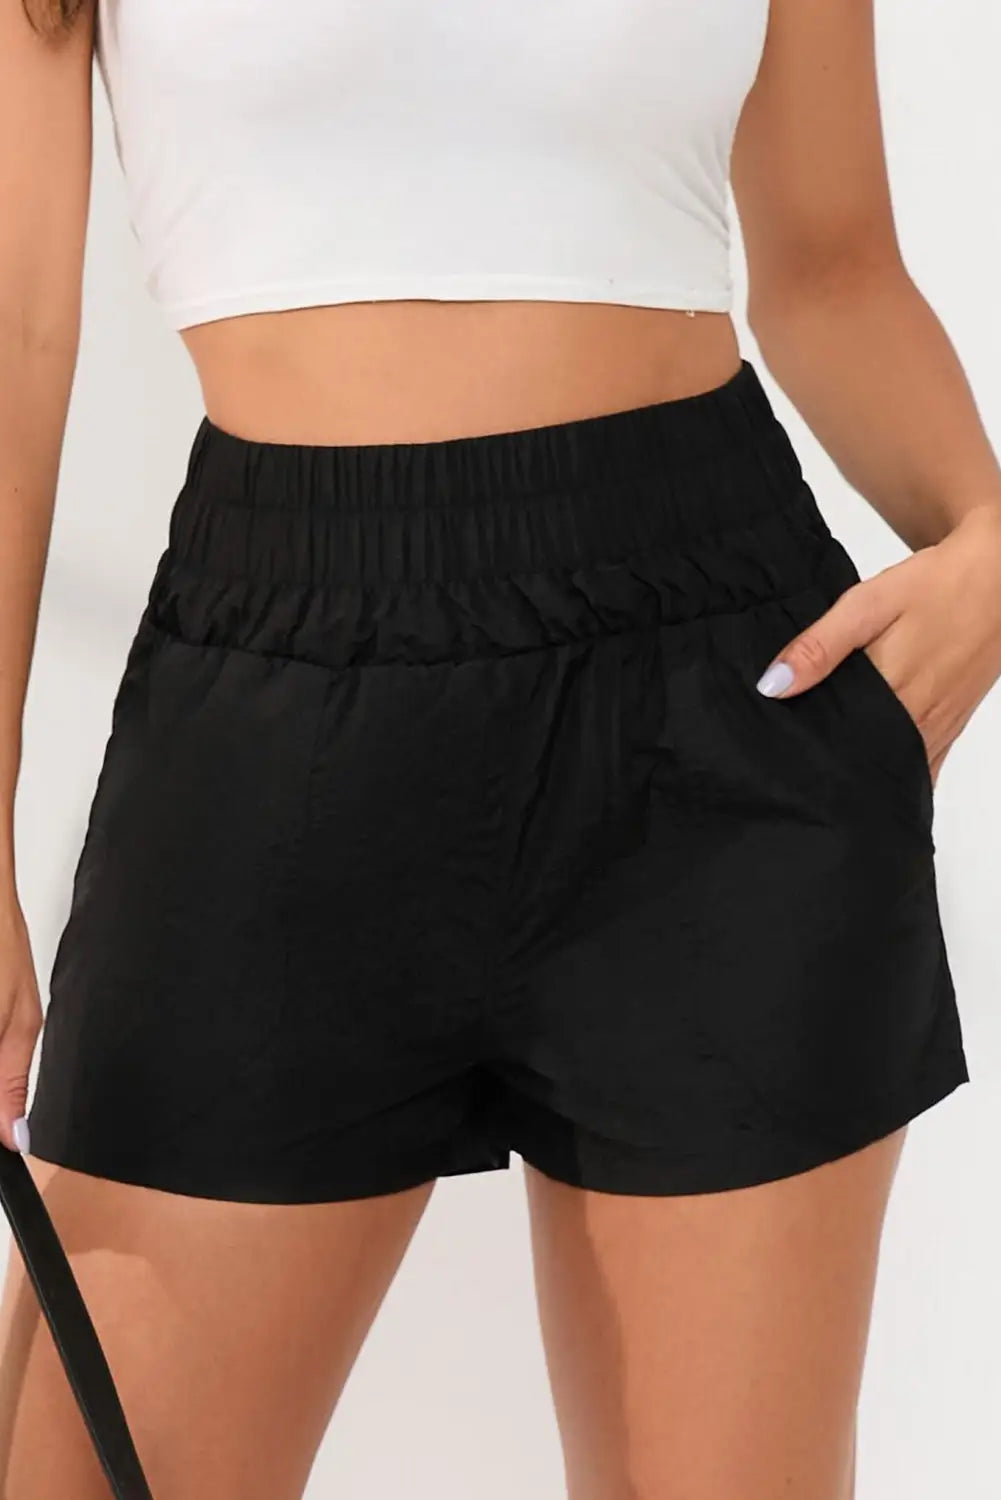 Black elastic high waist side pockets shorts - s / 100% polyamide